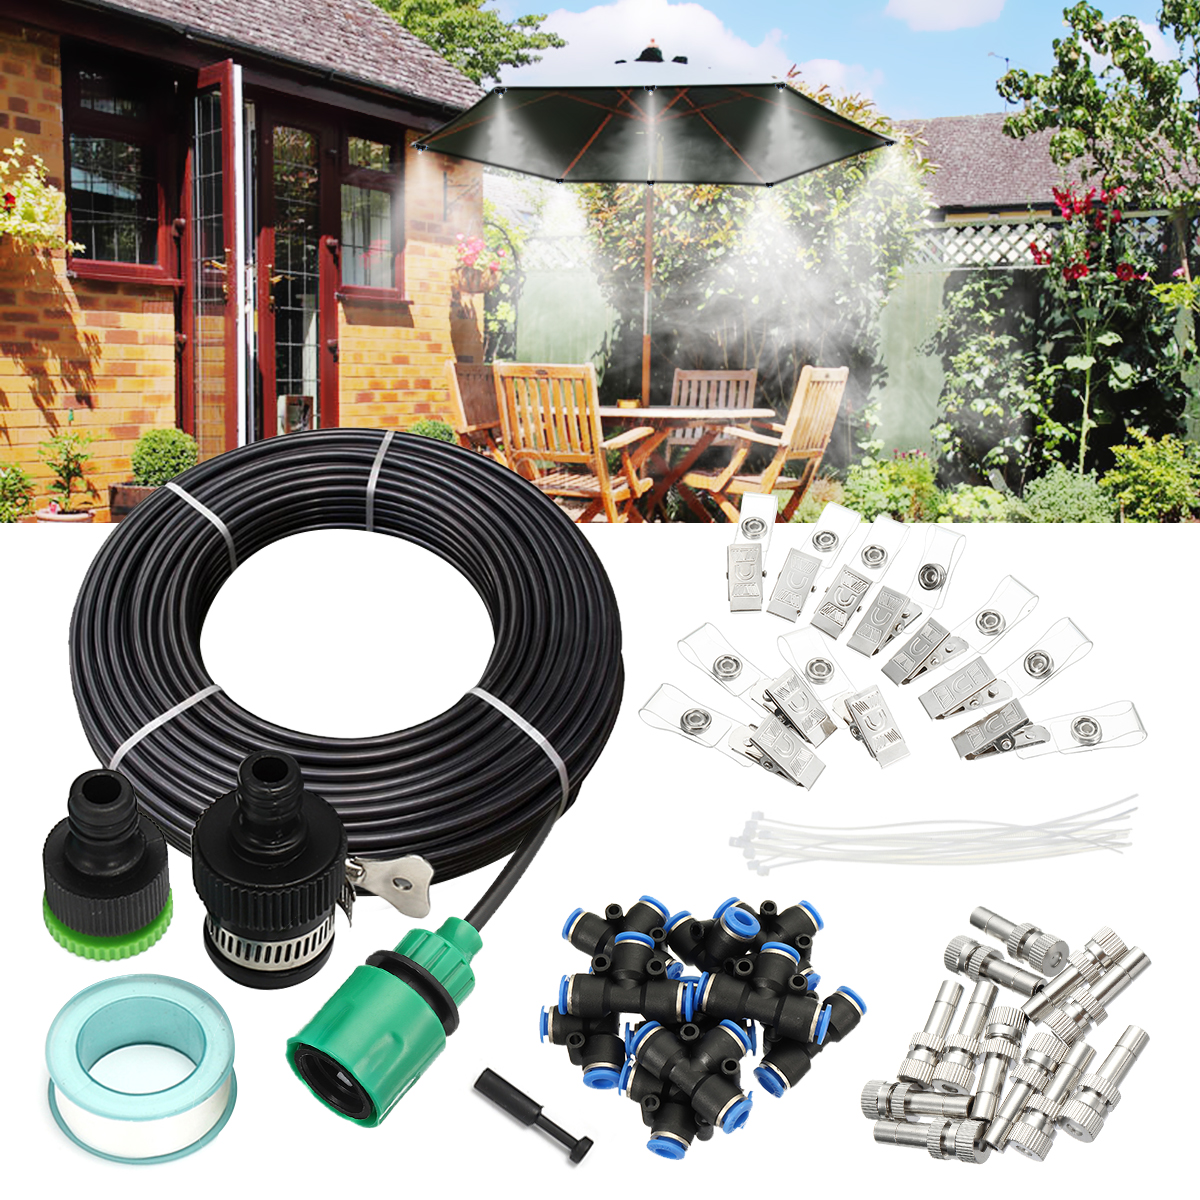 PATHONOR-10M-48PCS-Automatic-Sprinkler-DIY-Garden-Watering-Micro-Drip-Irrigation-System-Hose-Kits-1889969-2